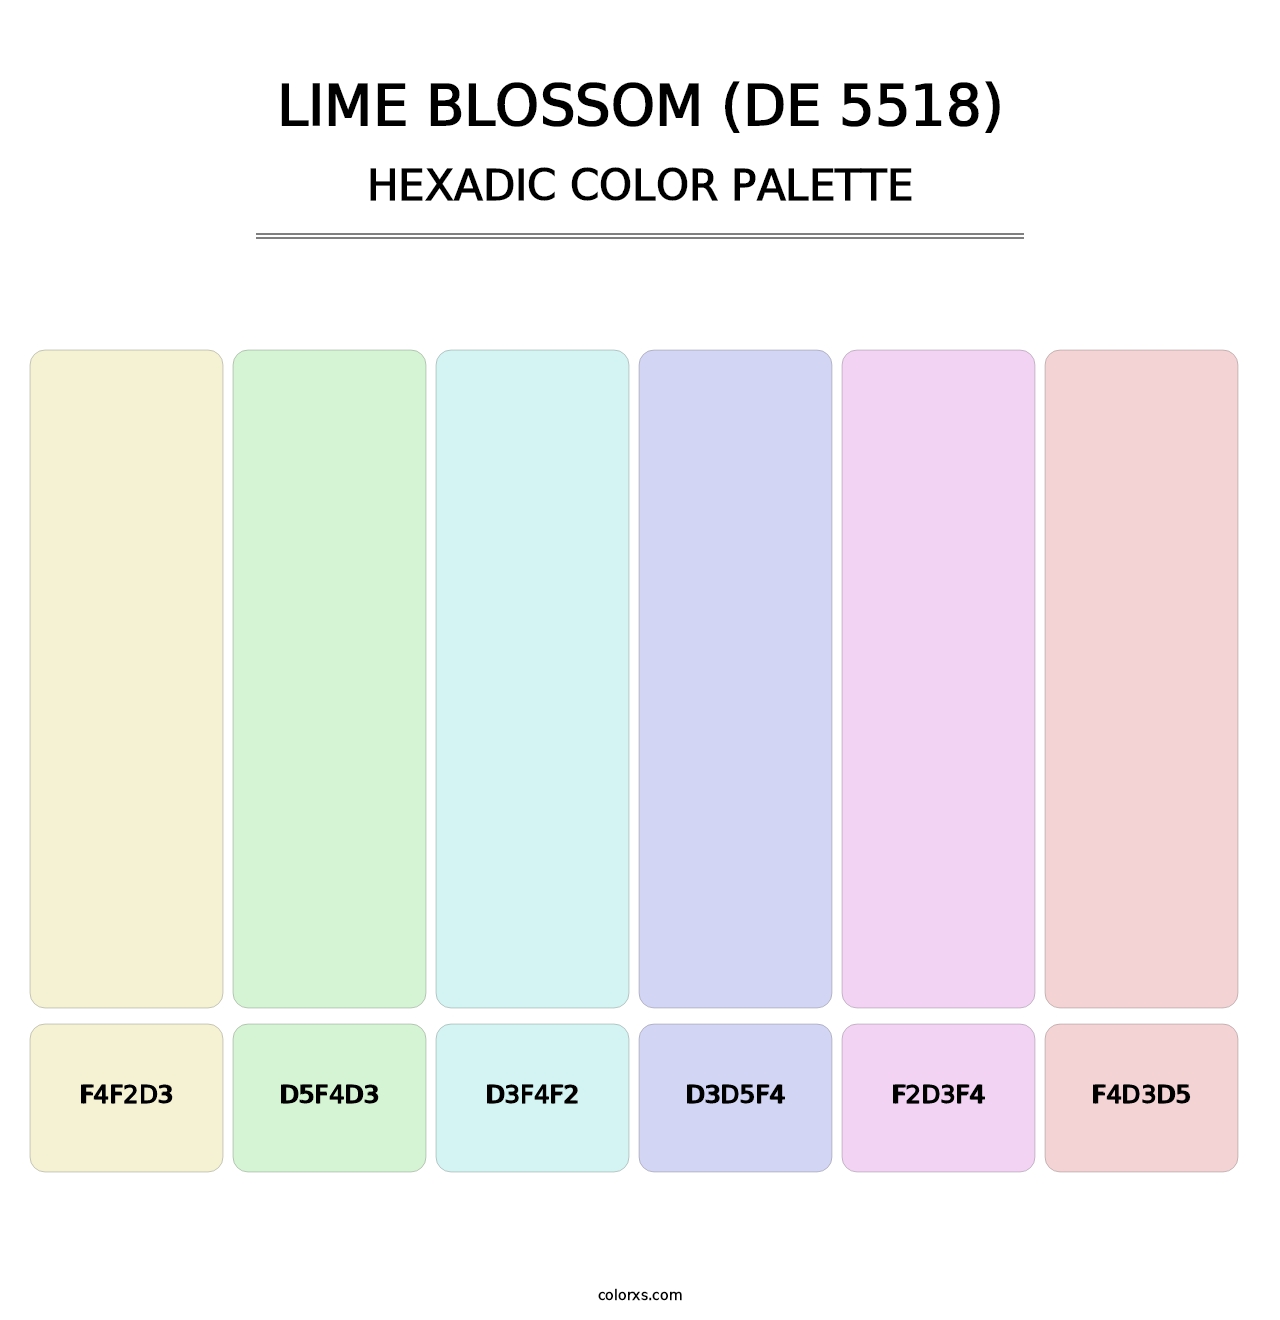 Lime Blossom (DE 5518) - Hexadic Color Palette